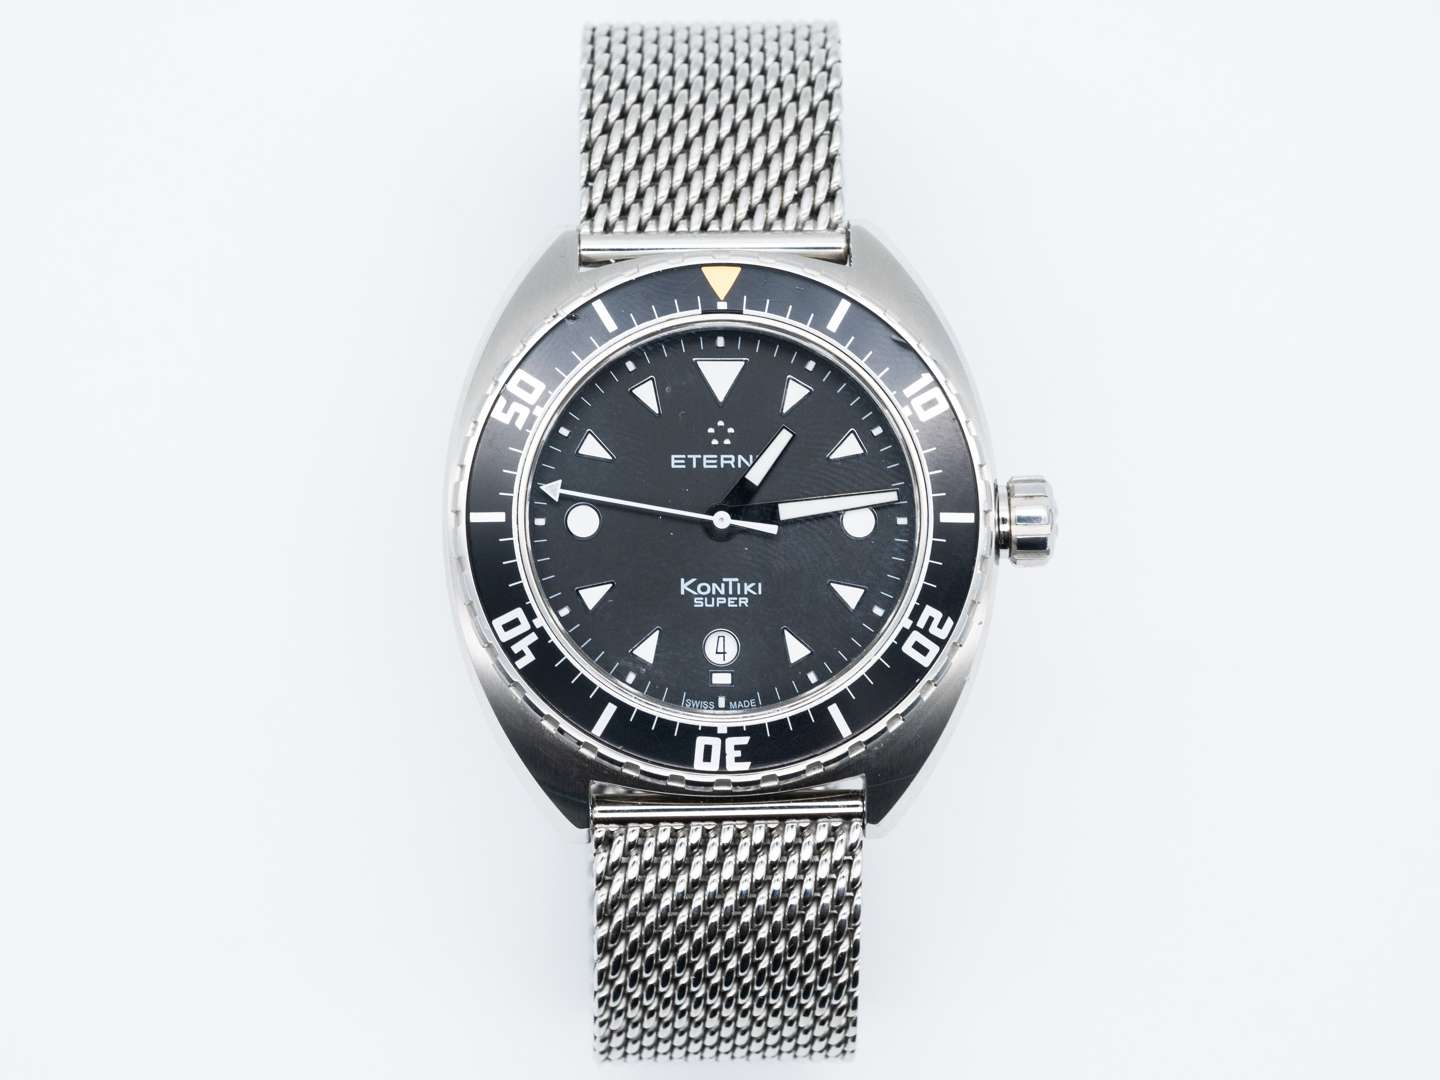 ETERNA, KONTIKI- SUPER, stainless steel, automatic, centre second, calendar wristwatch.